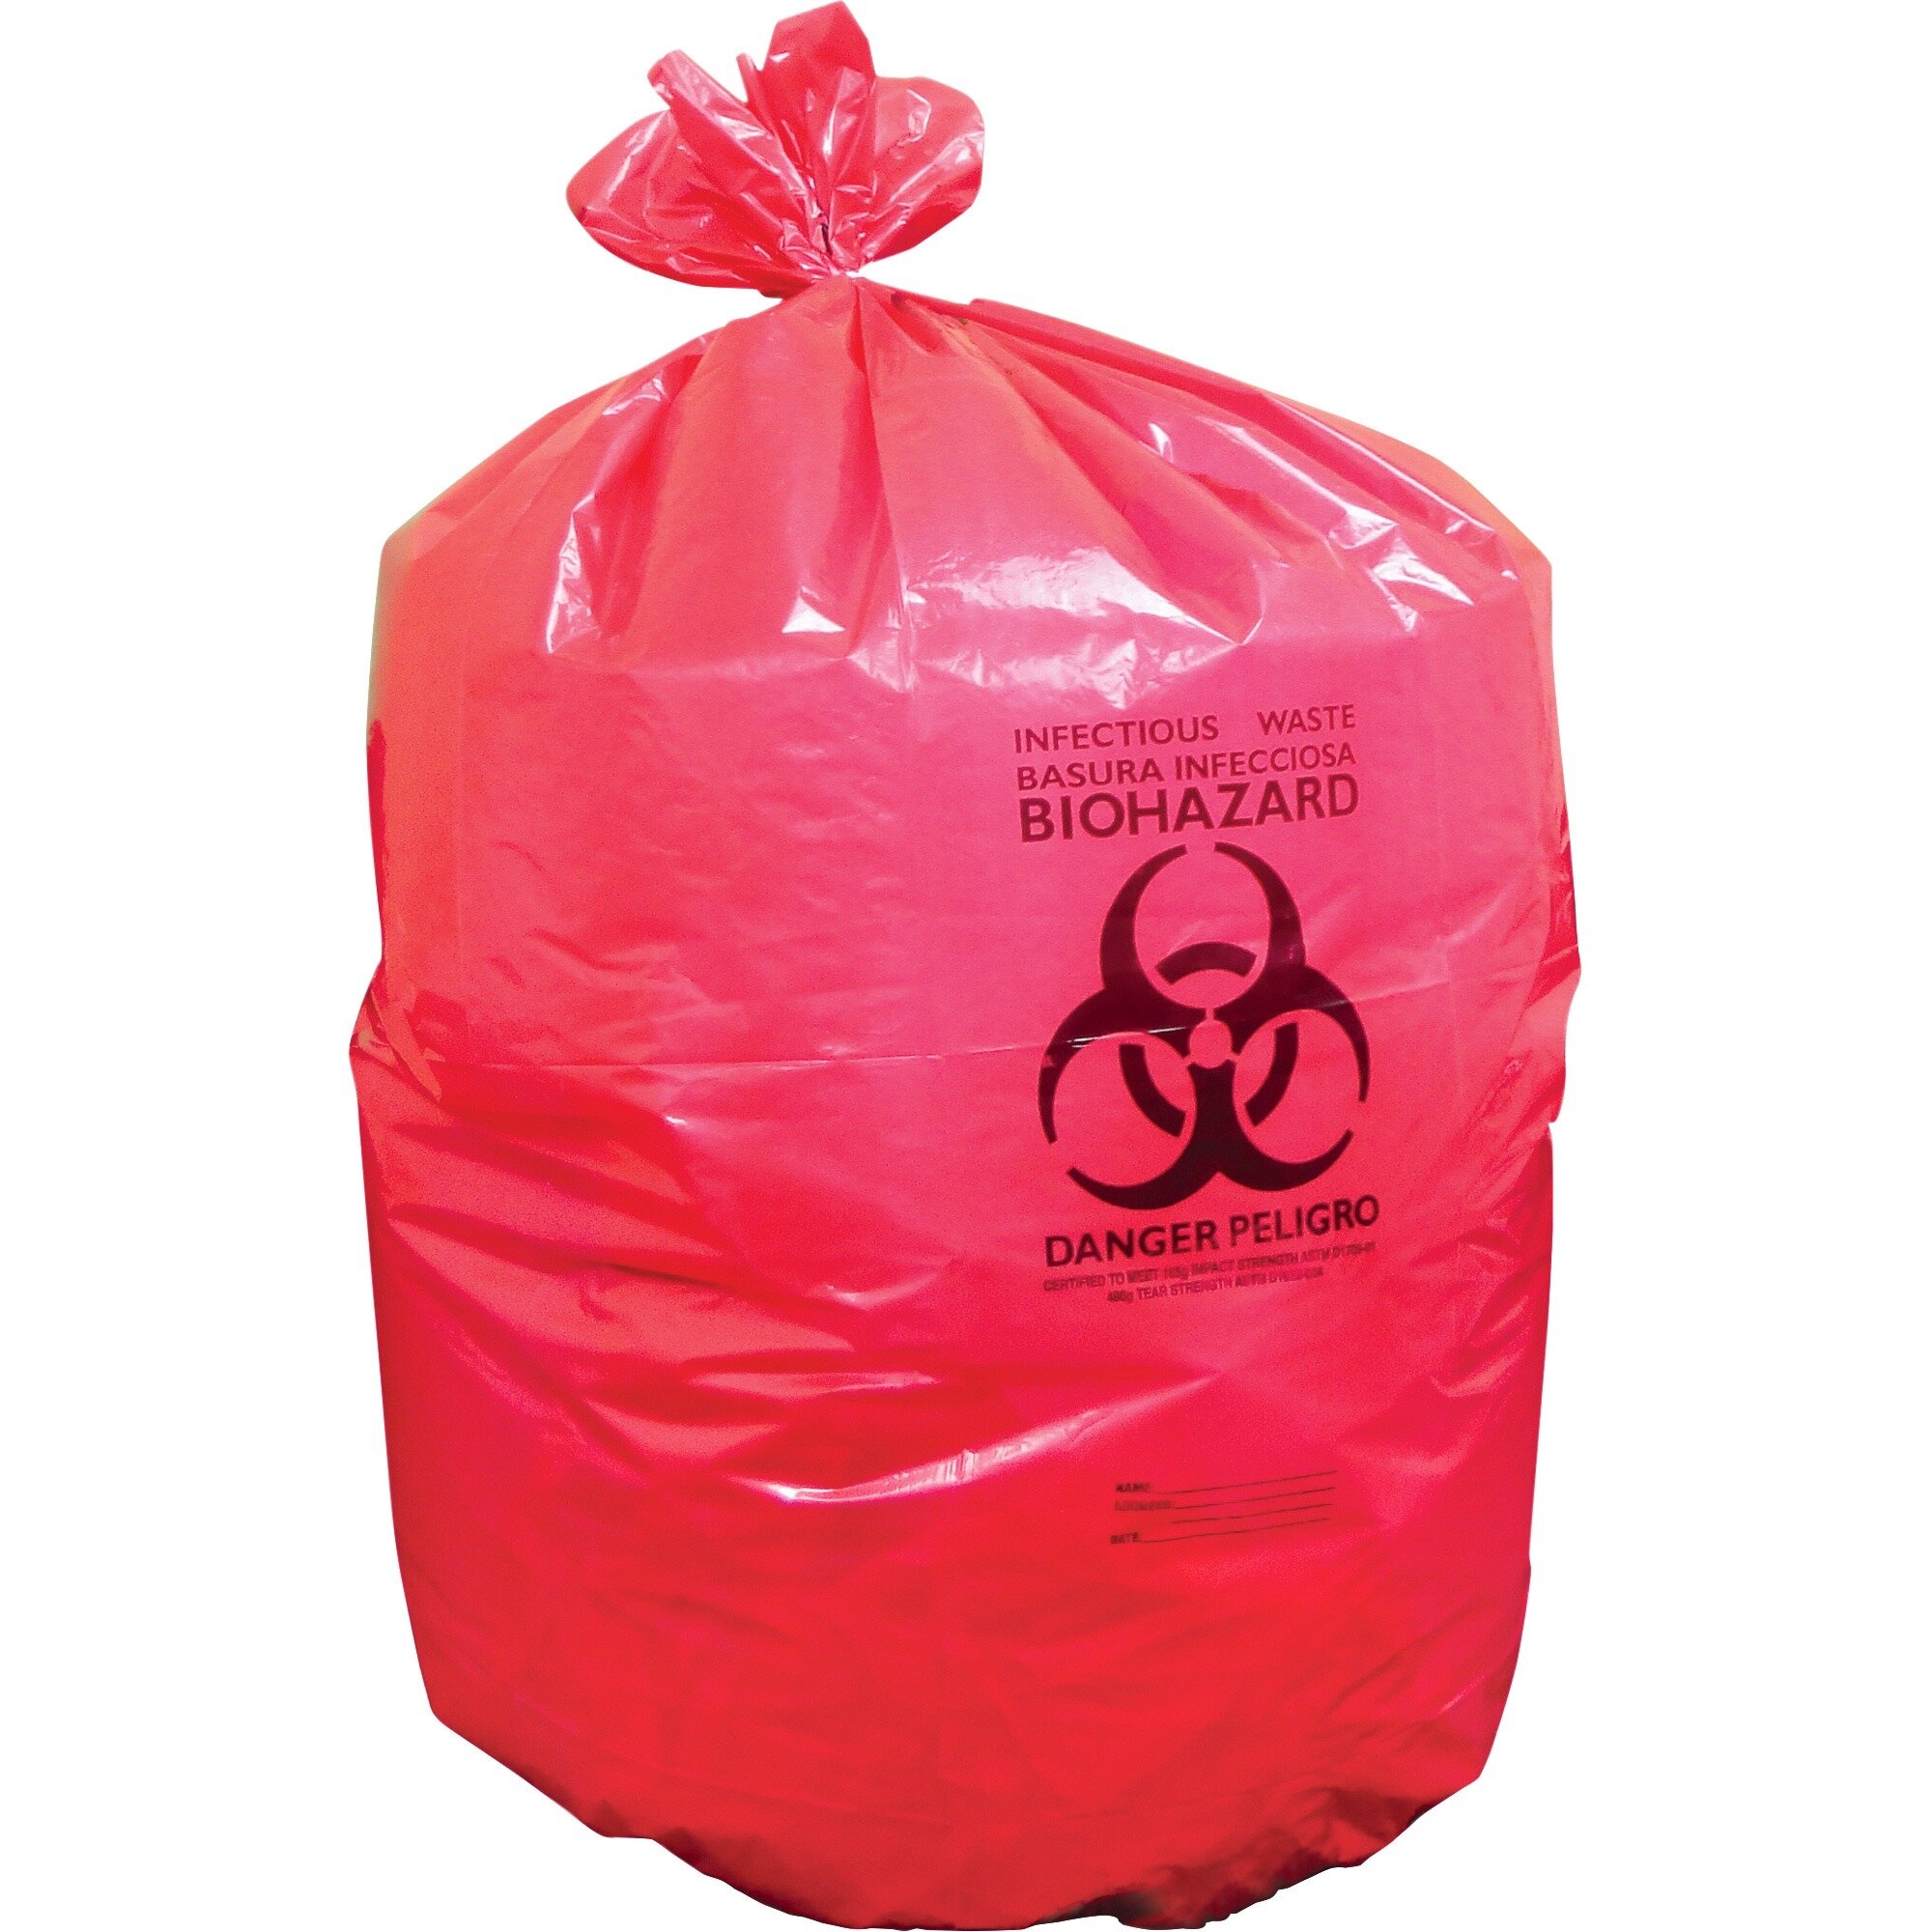 13 Gallons Polyethylene Plastic Trash Bags - 200 Count